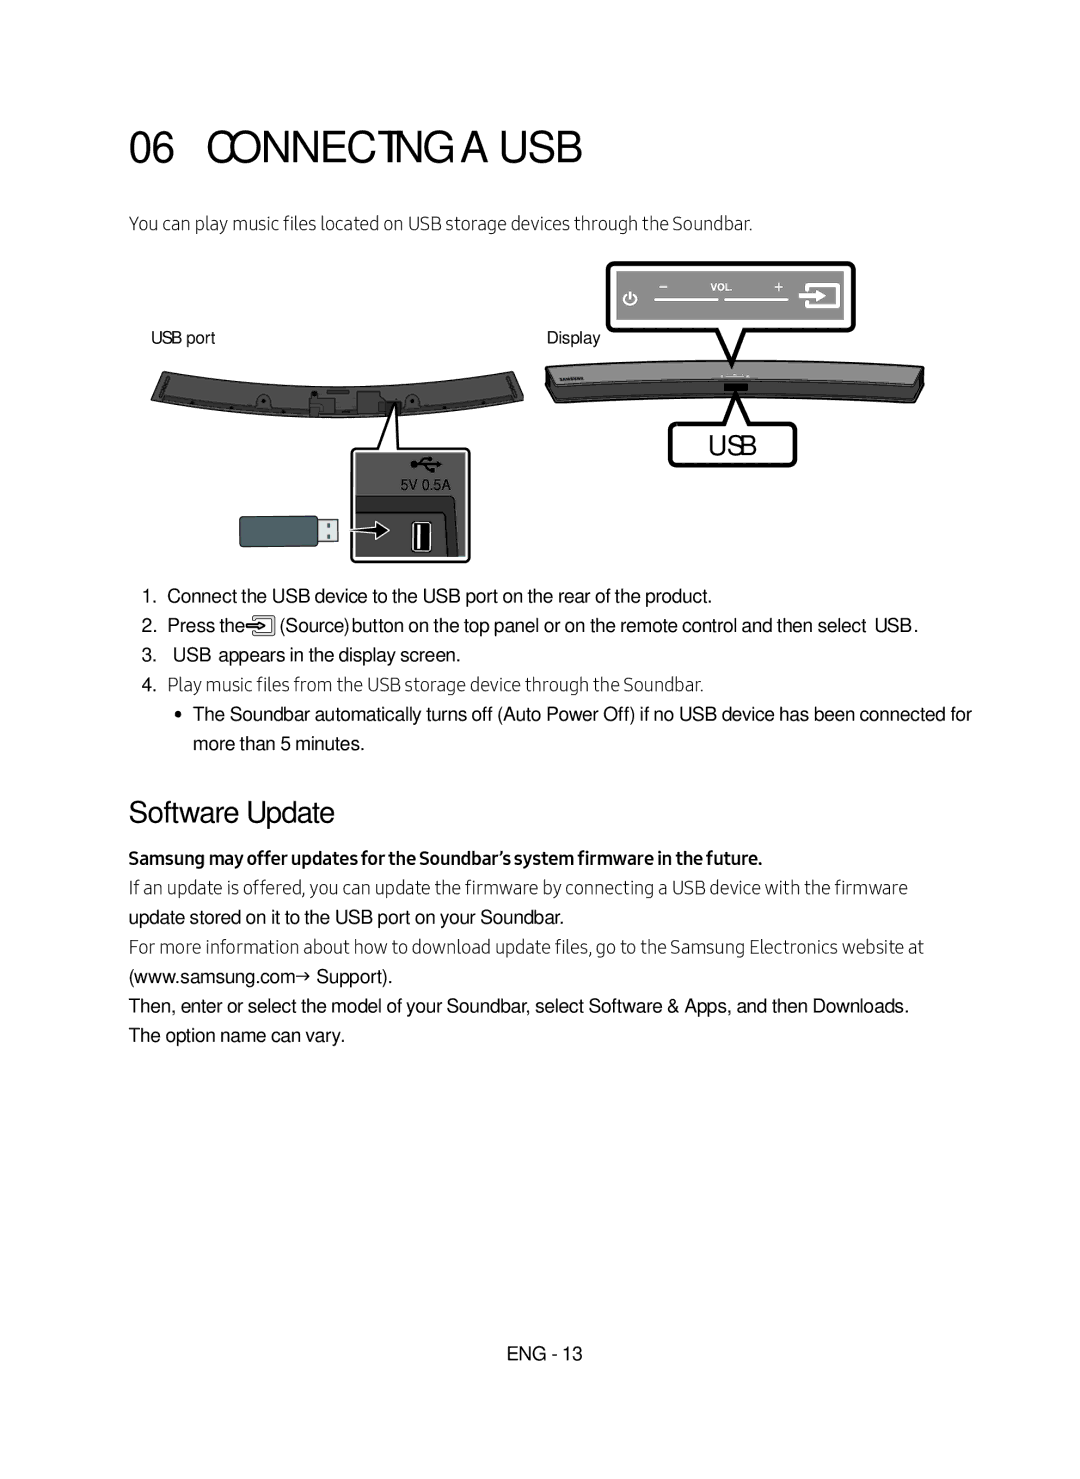 Samsung HW-M4500/EN manual Connecting a USB, Software Update, USB port 